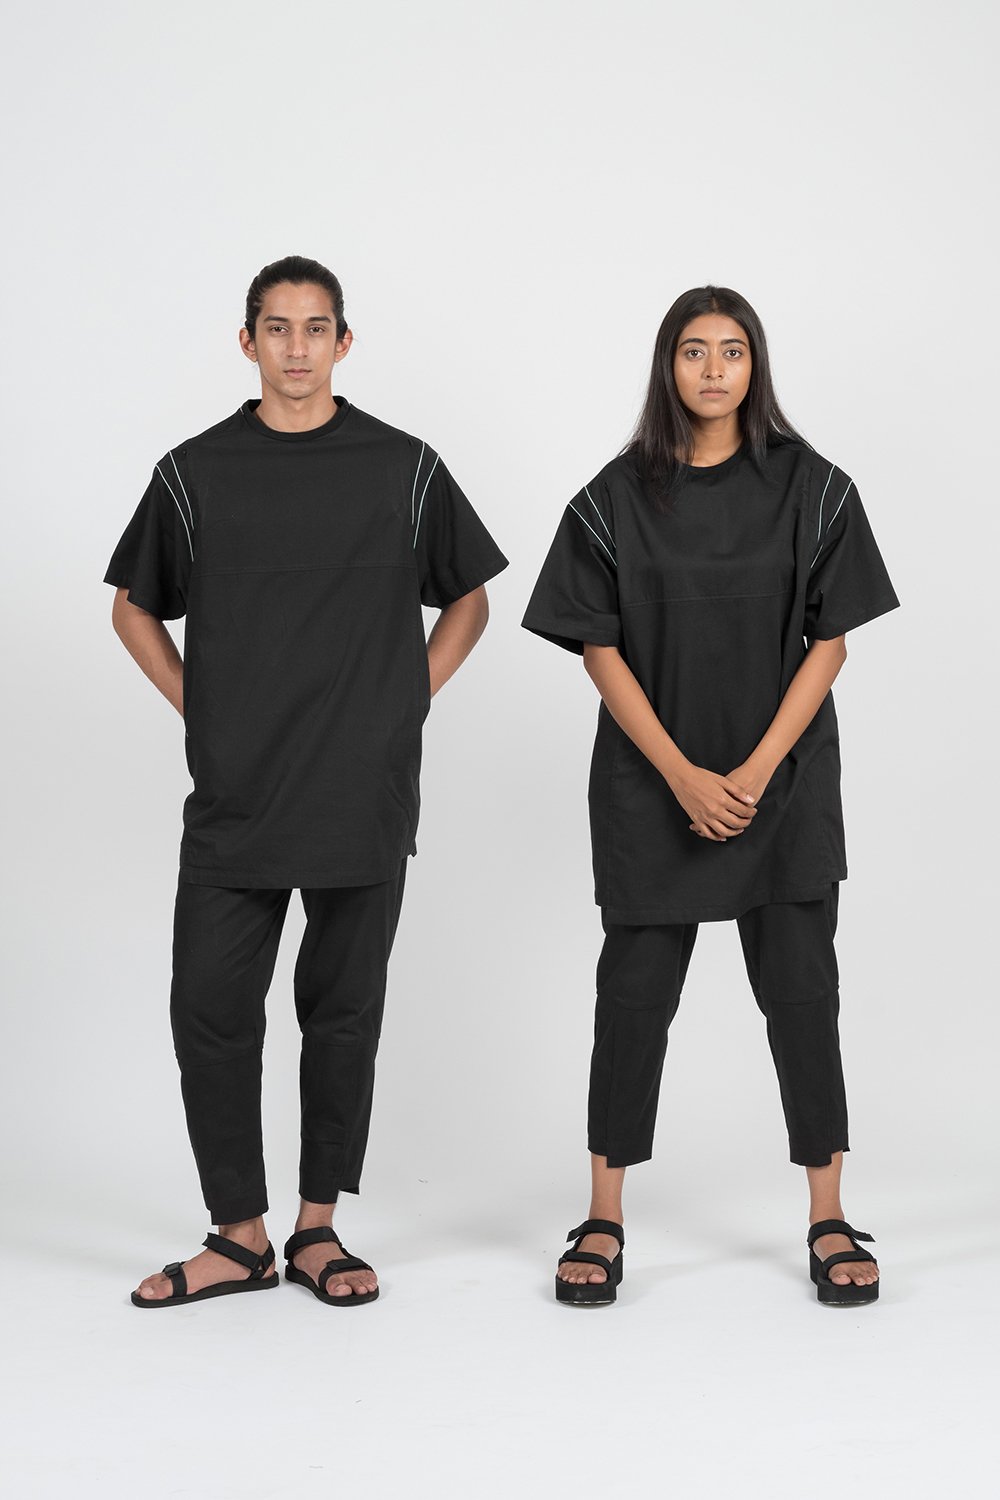 Black Unisex Pants. 100% Cotton. Designed in Madras, Made in India  | BISKIT UNISEX CLOTHING LABEL